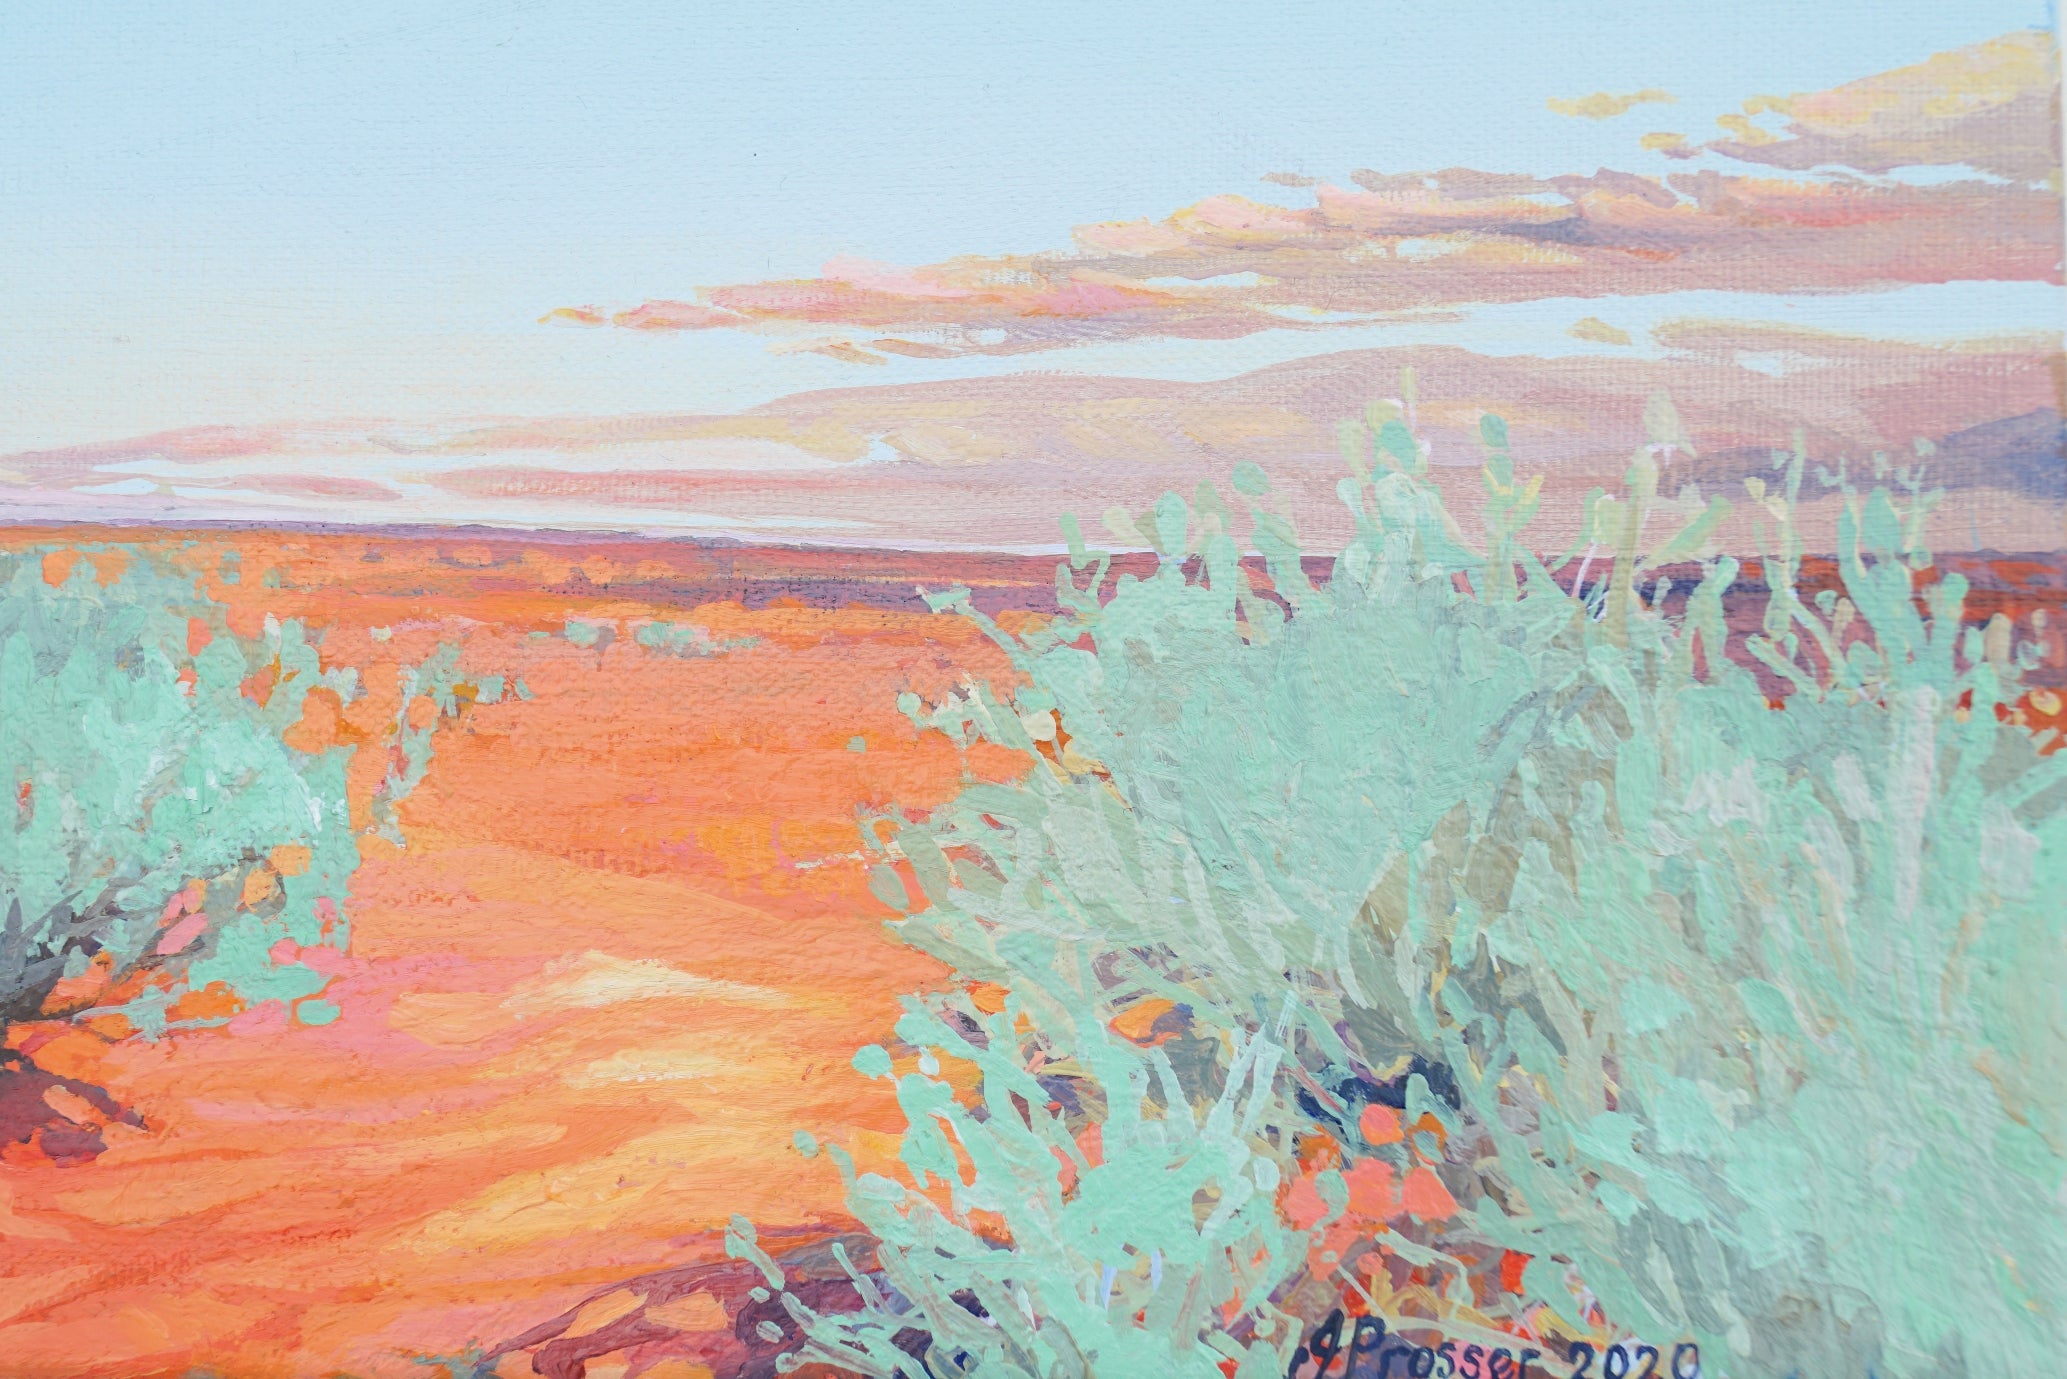 Canvas art print titled 'Red Dirt and Blue Sky' by Australian artist Jaime Prosser